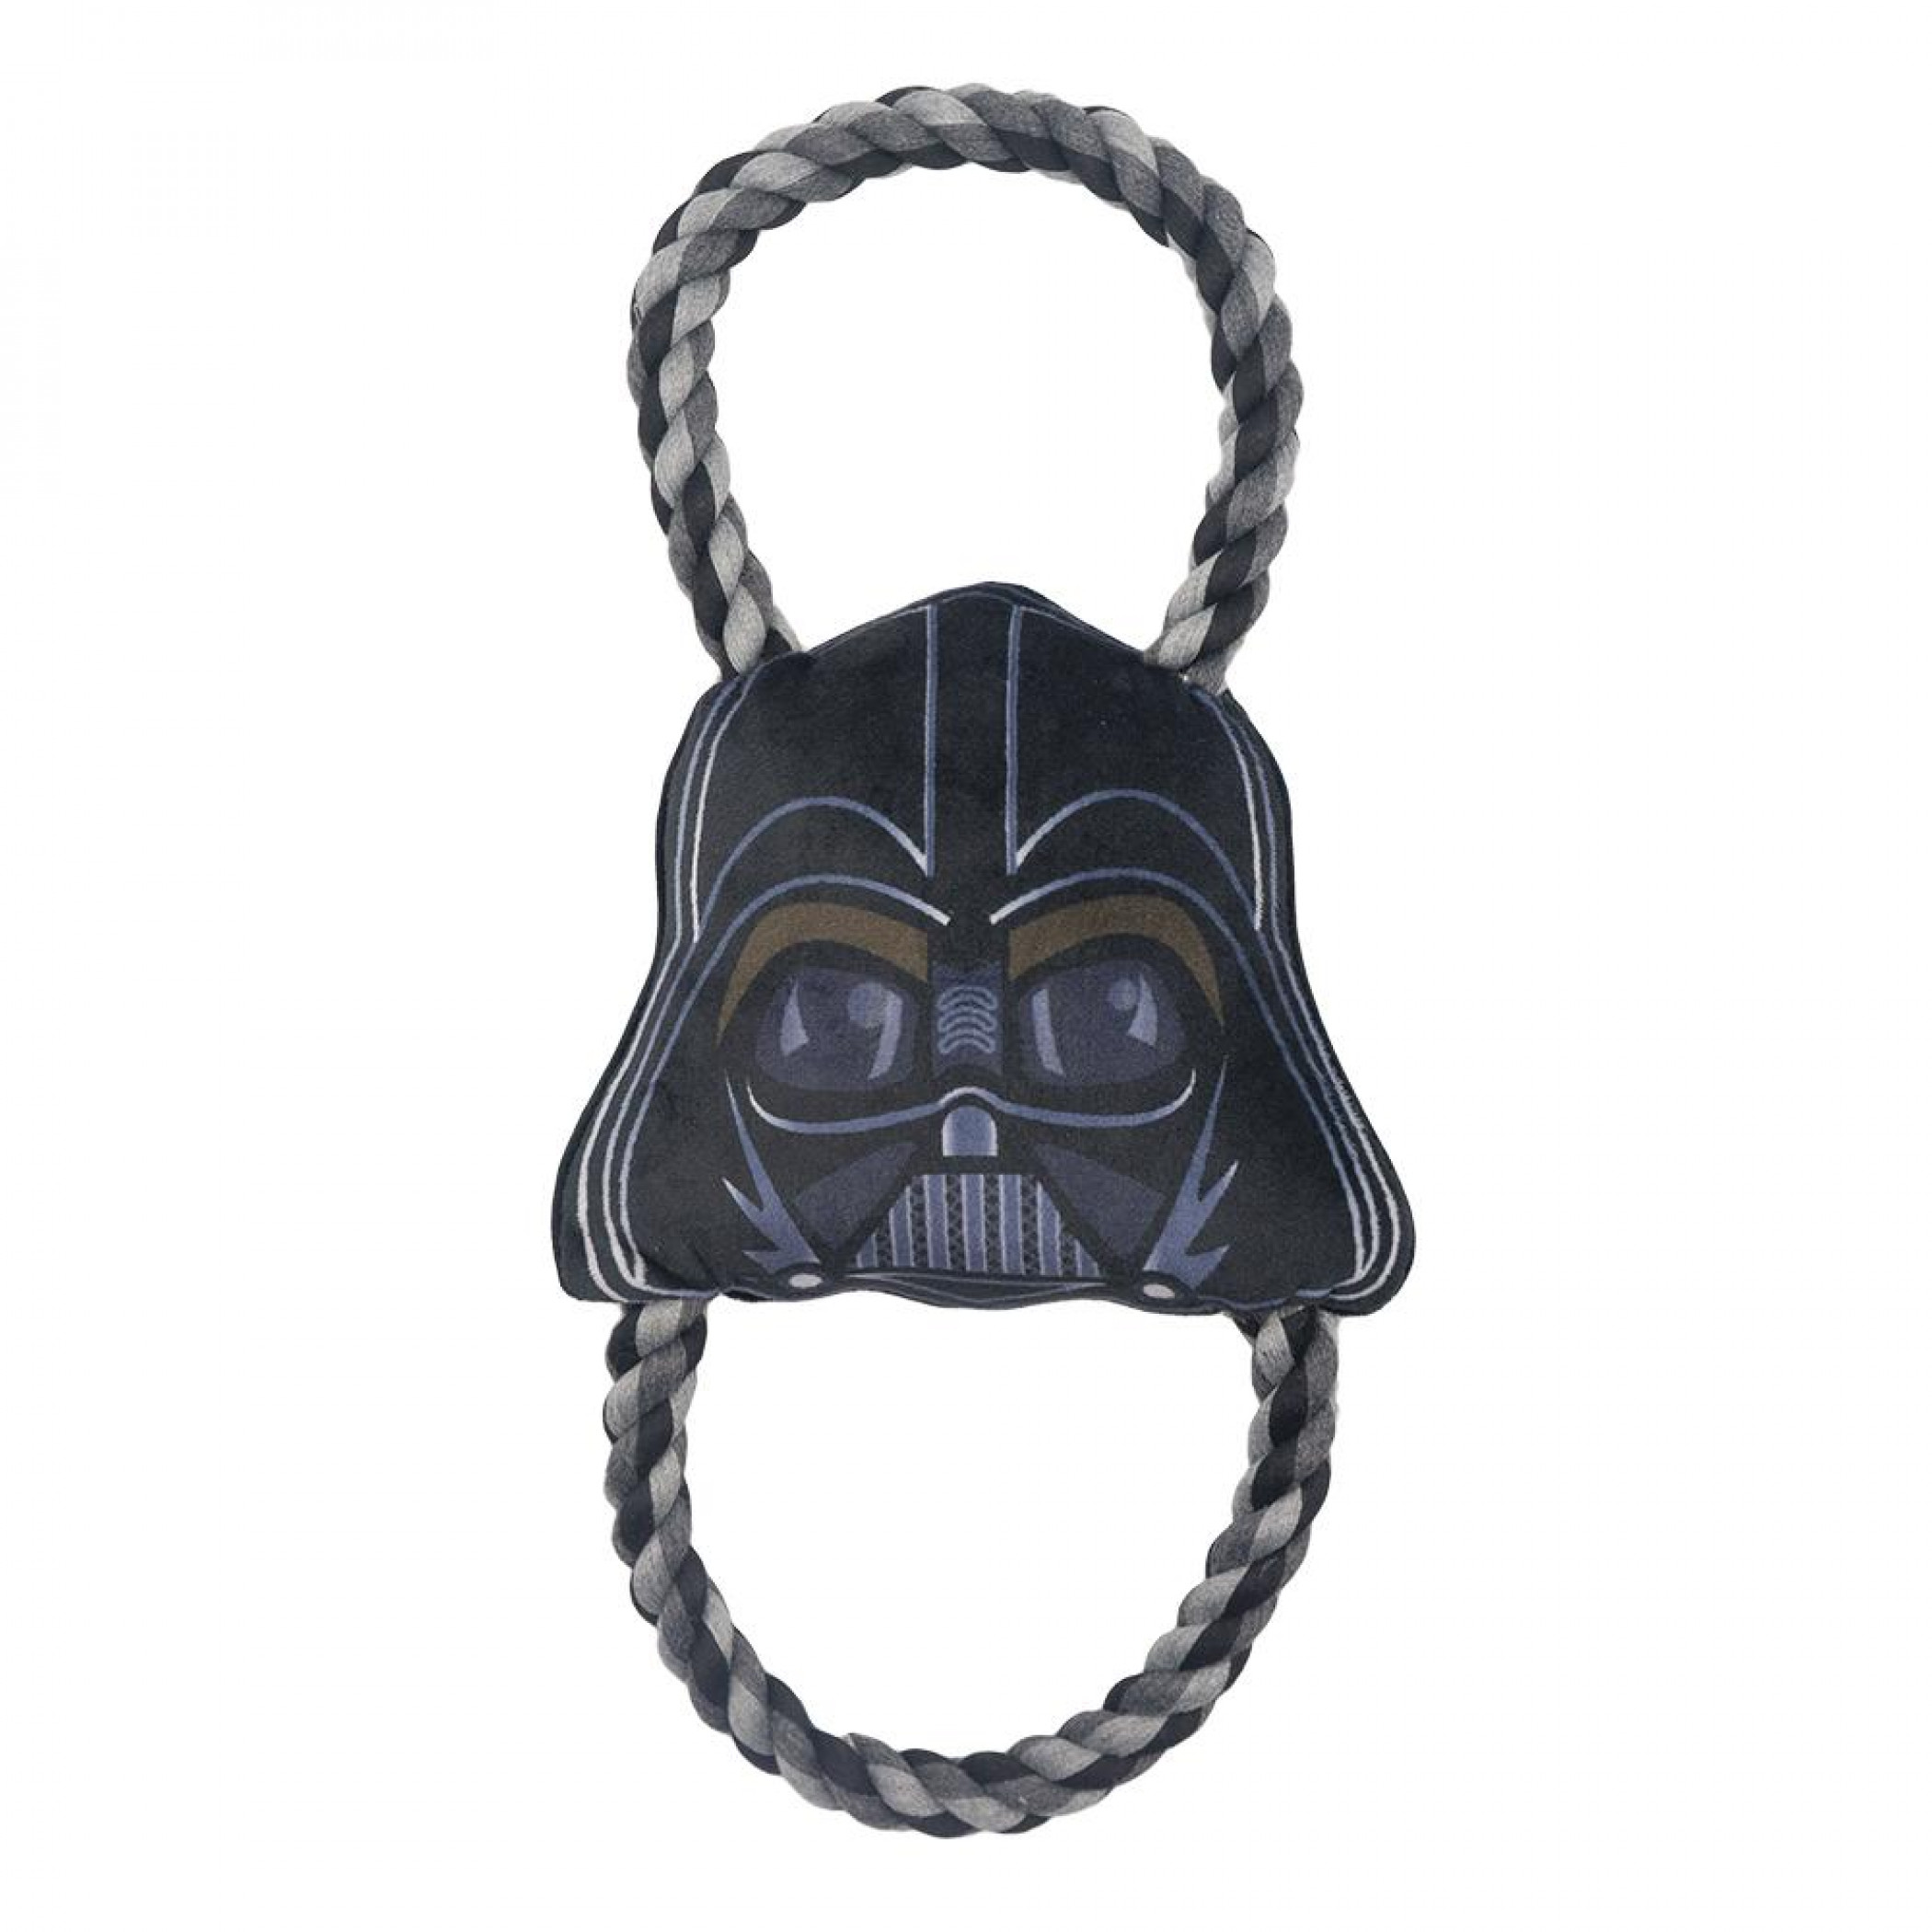 Star Wars Darth Vader Shaped Plush and Rope Dog Toy